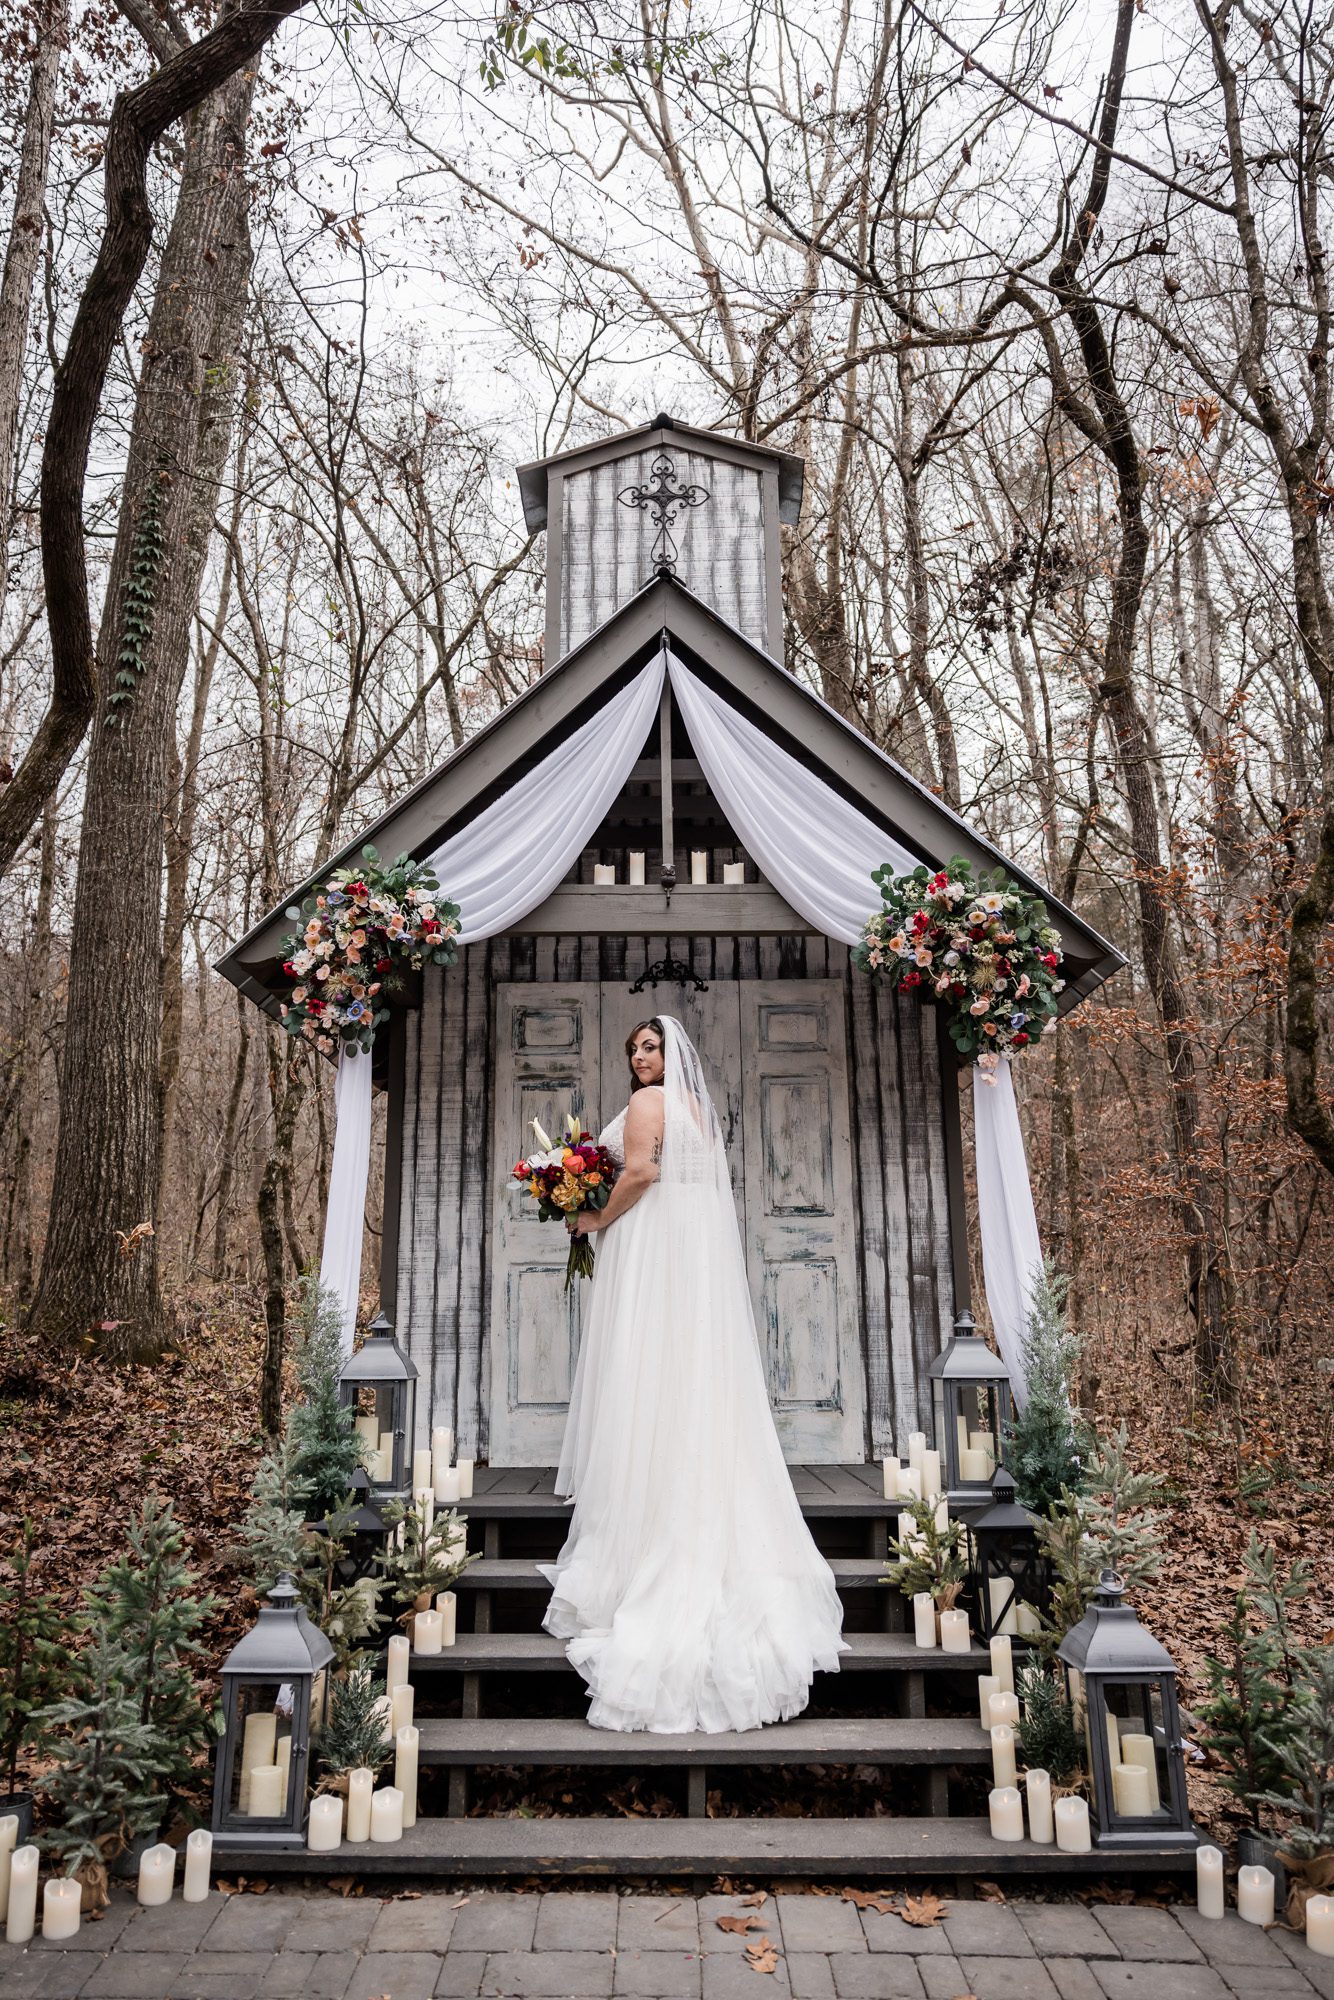 Outdoor bride portrait